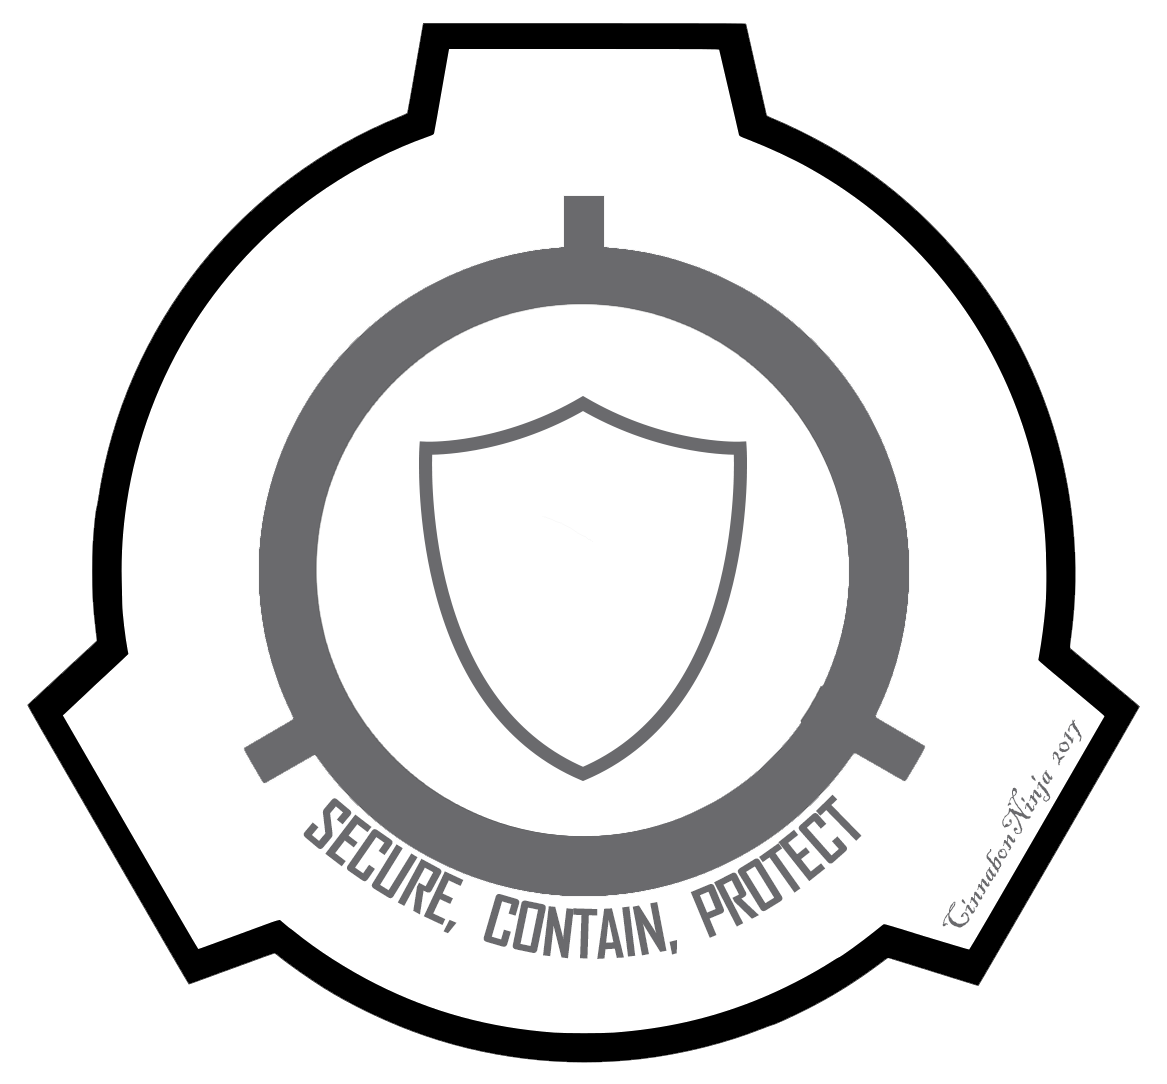 Scp 8000. Служба безопасности SCP лого. Значок охраны SCP. Отдел внутренней безопасности SCP логотип. Значок фонда SCP.